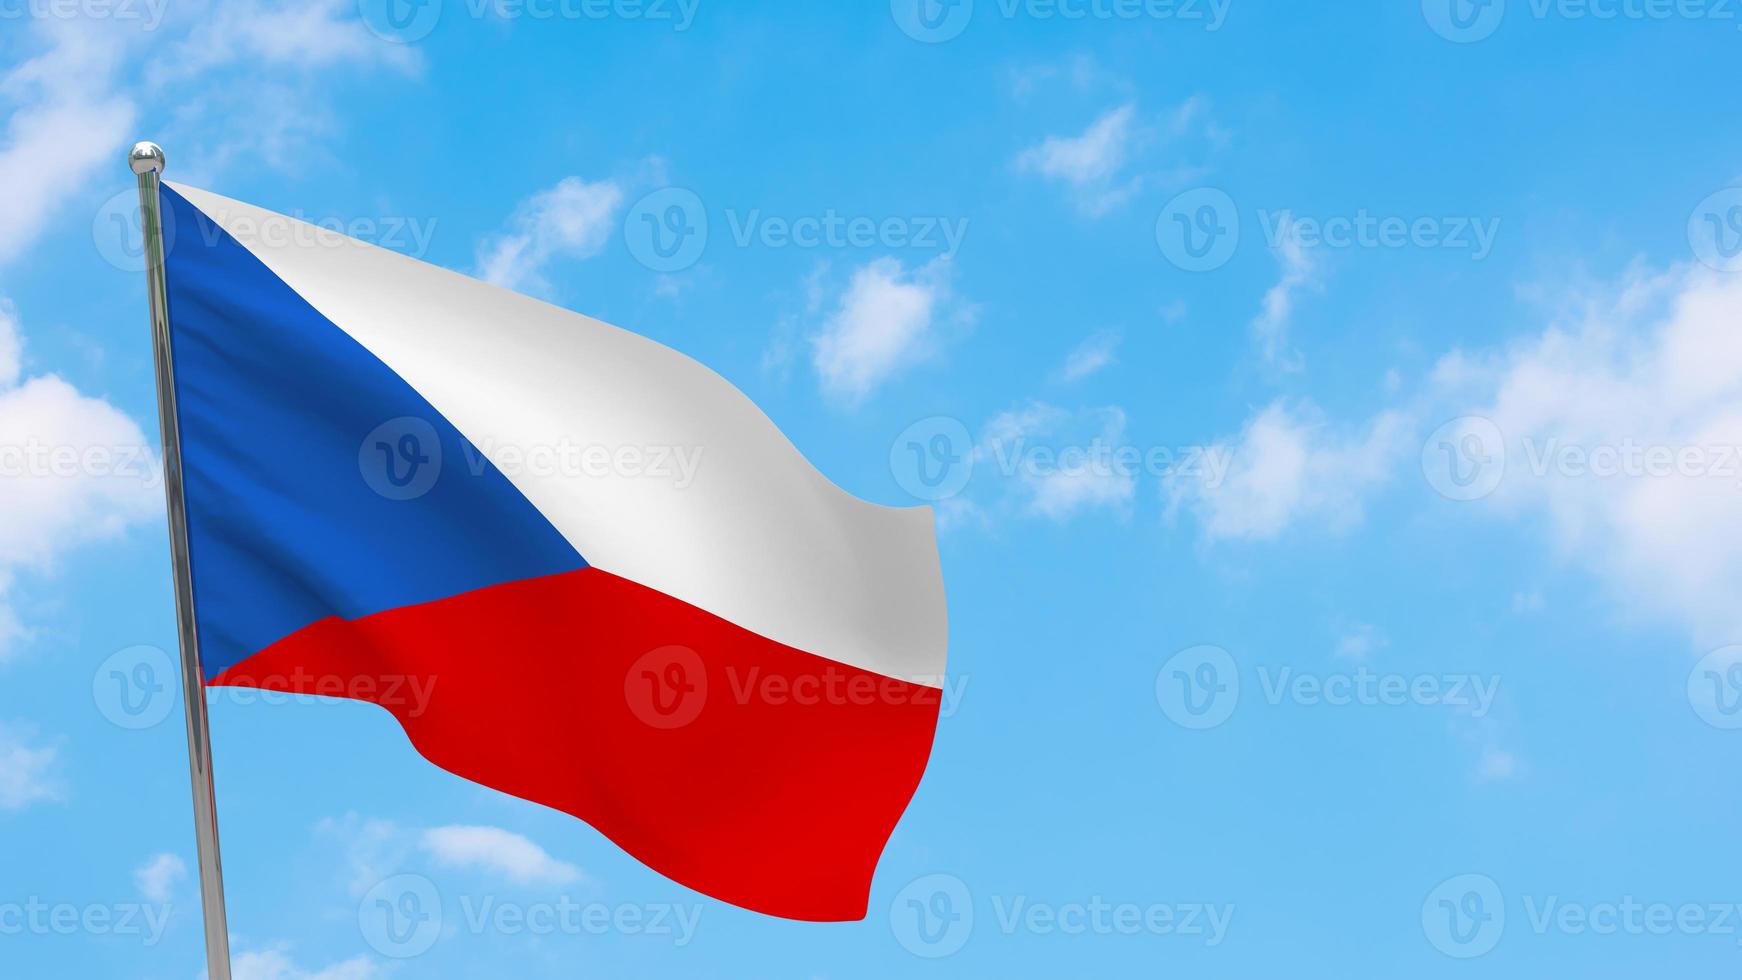 Czech Republic flag on pole photo